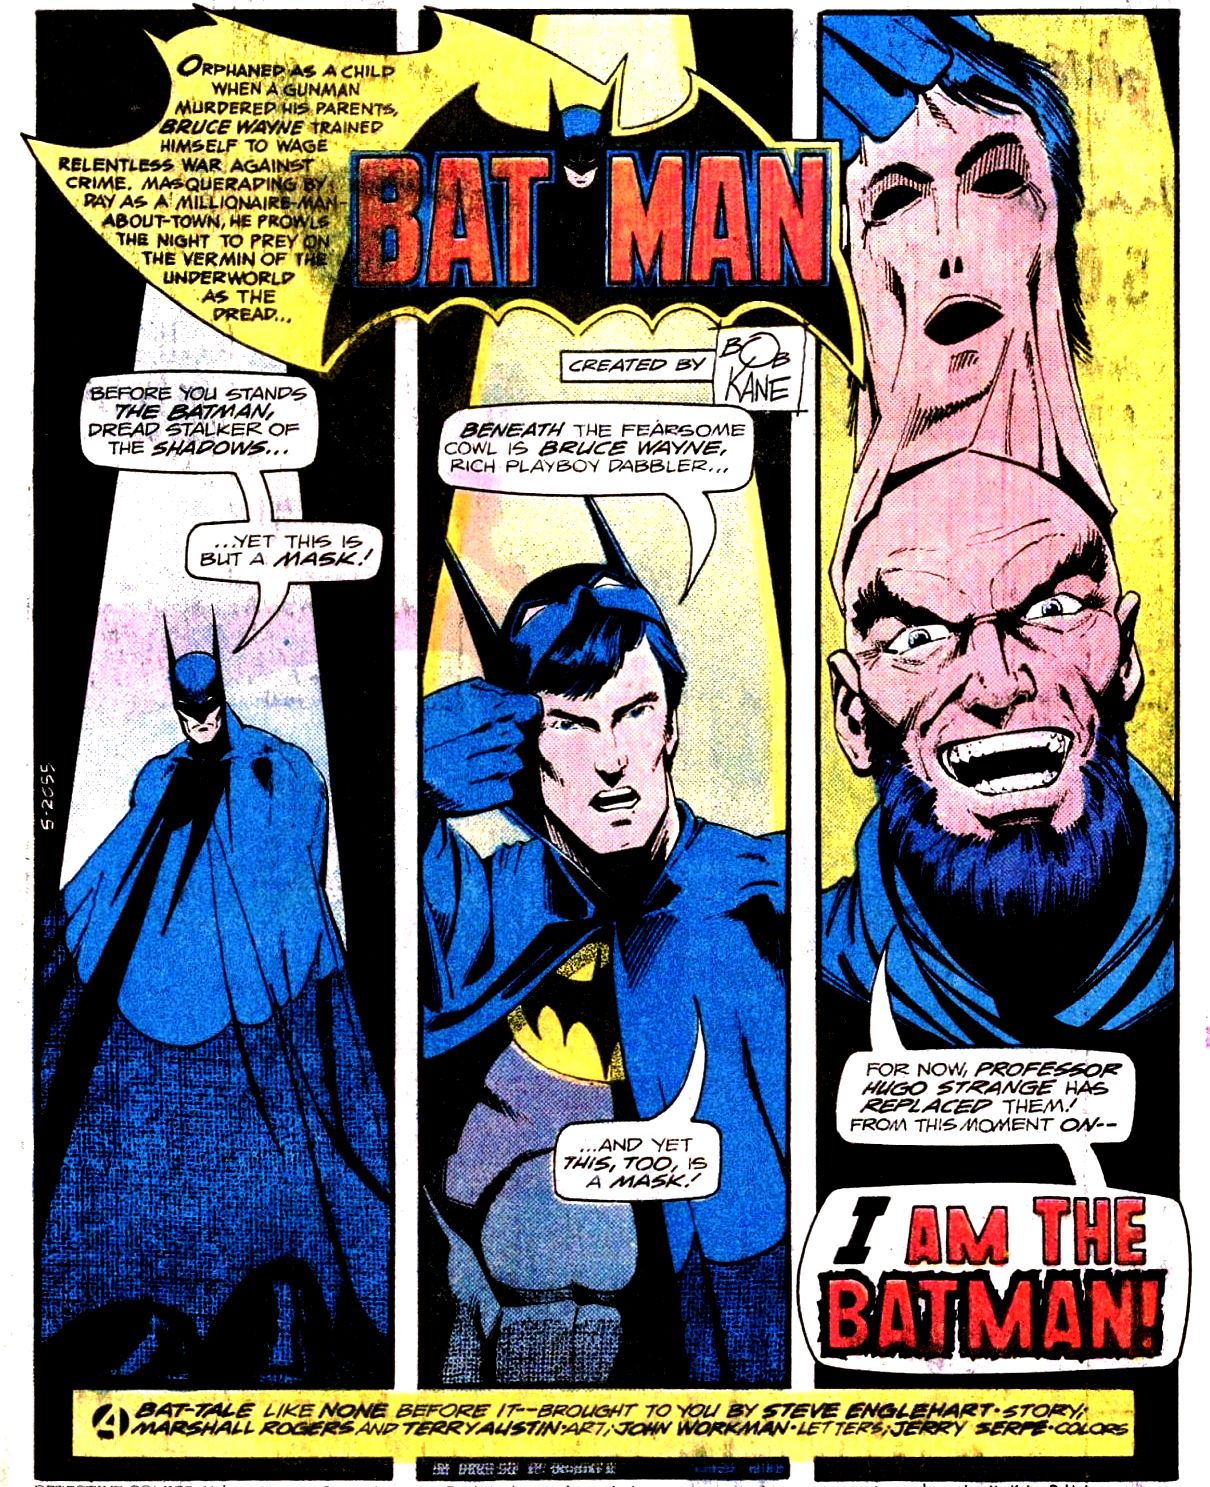 Read Up On Comics & The Thought Balloon - Spotlight on Batman's Villains -  Professor Hugo Strange